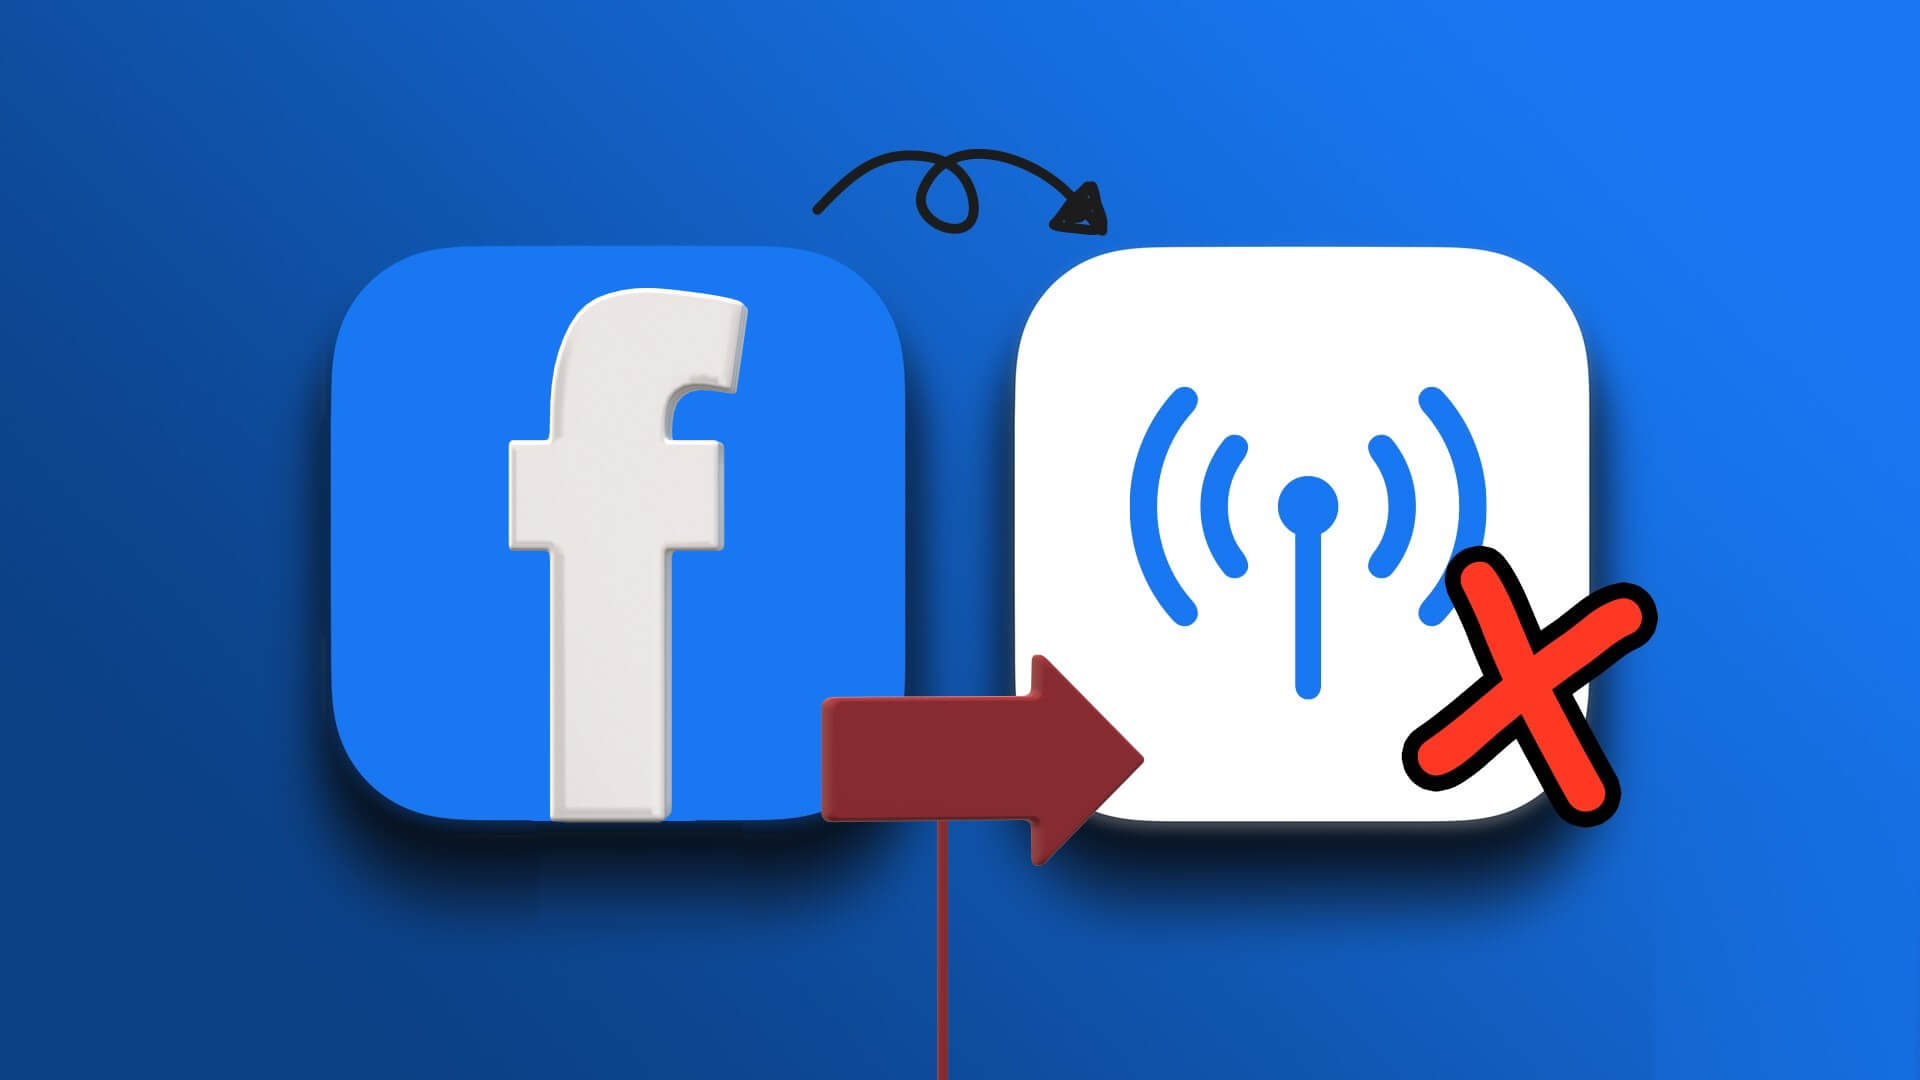 Top N Ways to Fix Facebook Not Working on Mobile Data - أفضل 9 طرق لإصلاح عدم عمل Facebook على بيانات الجوال